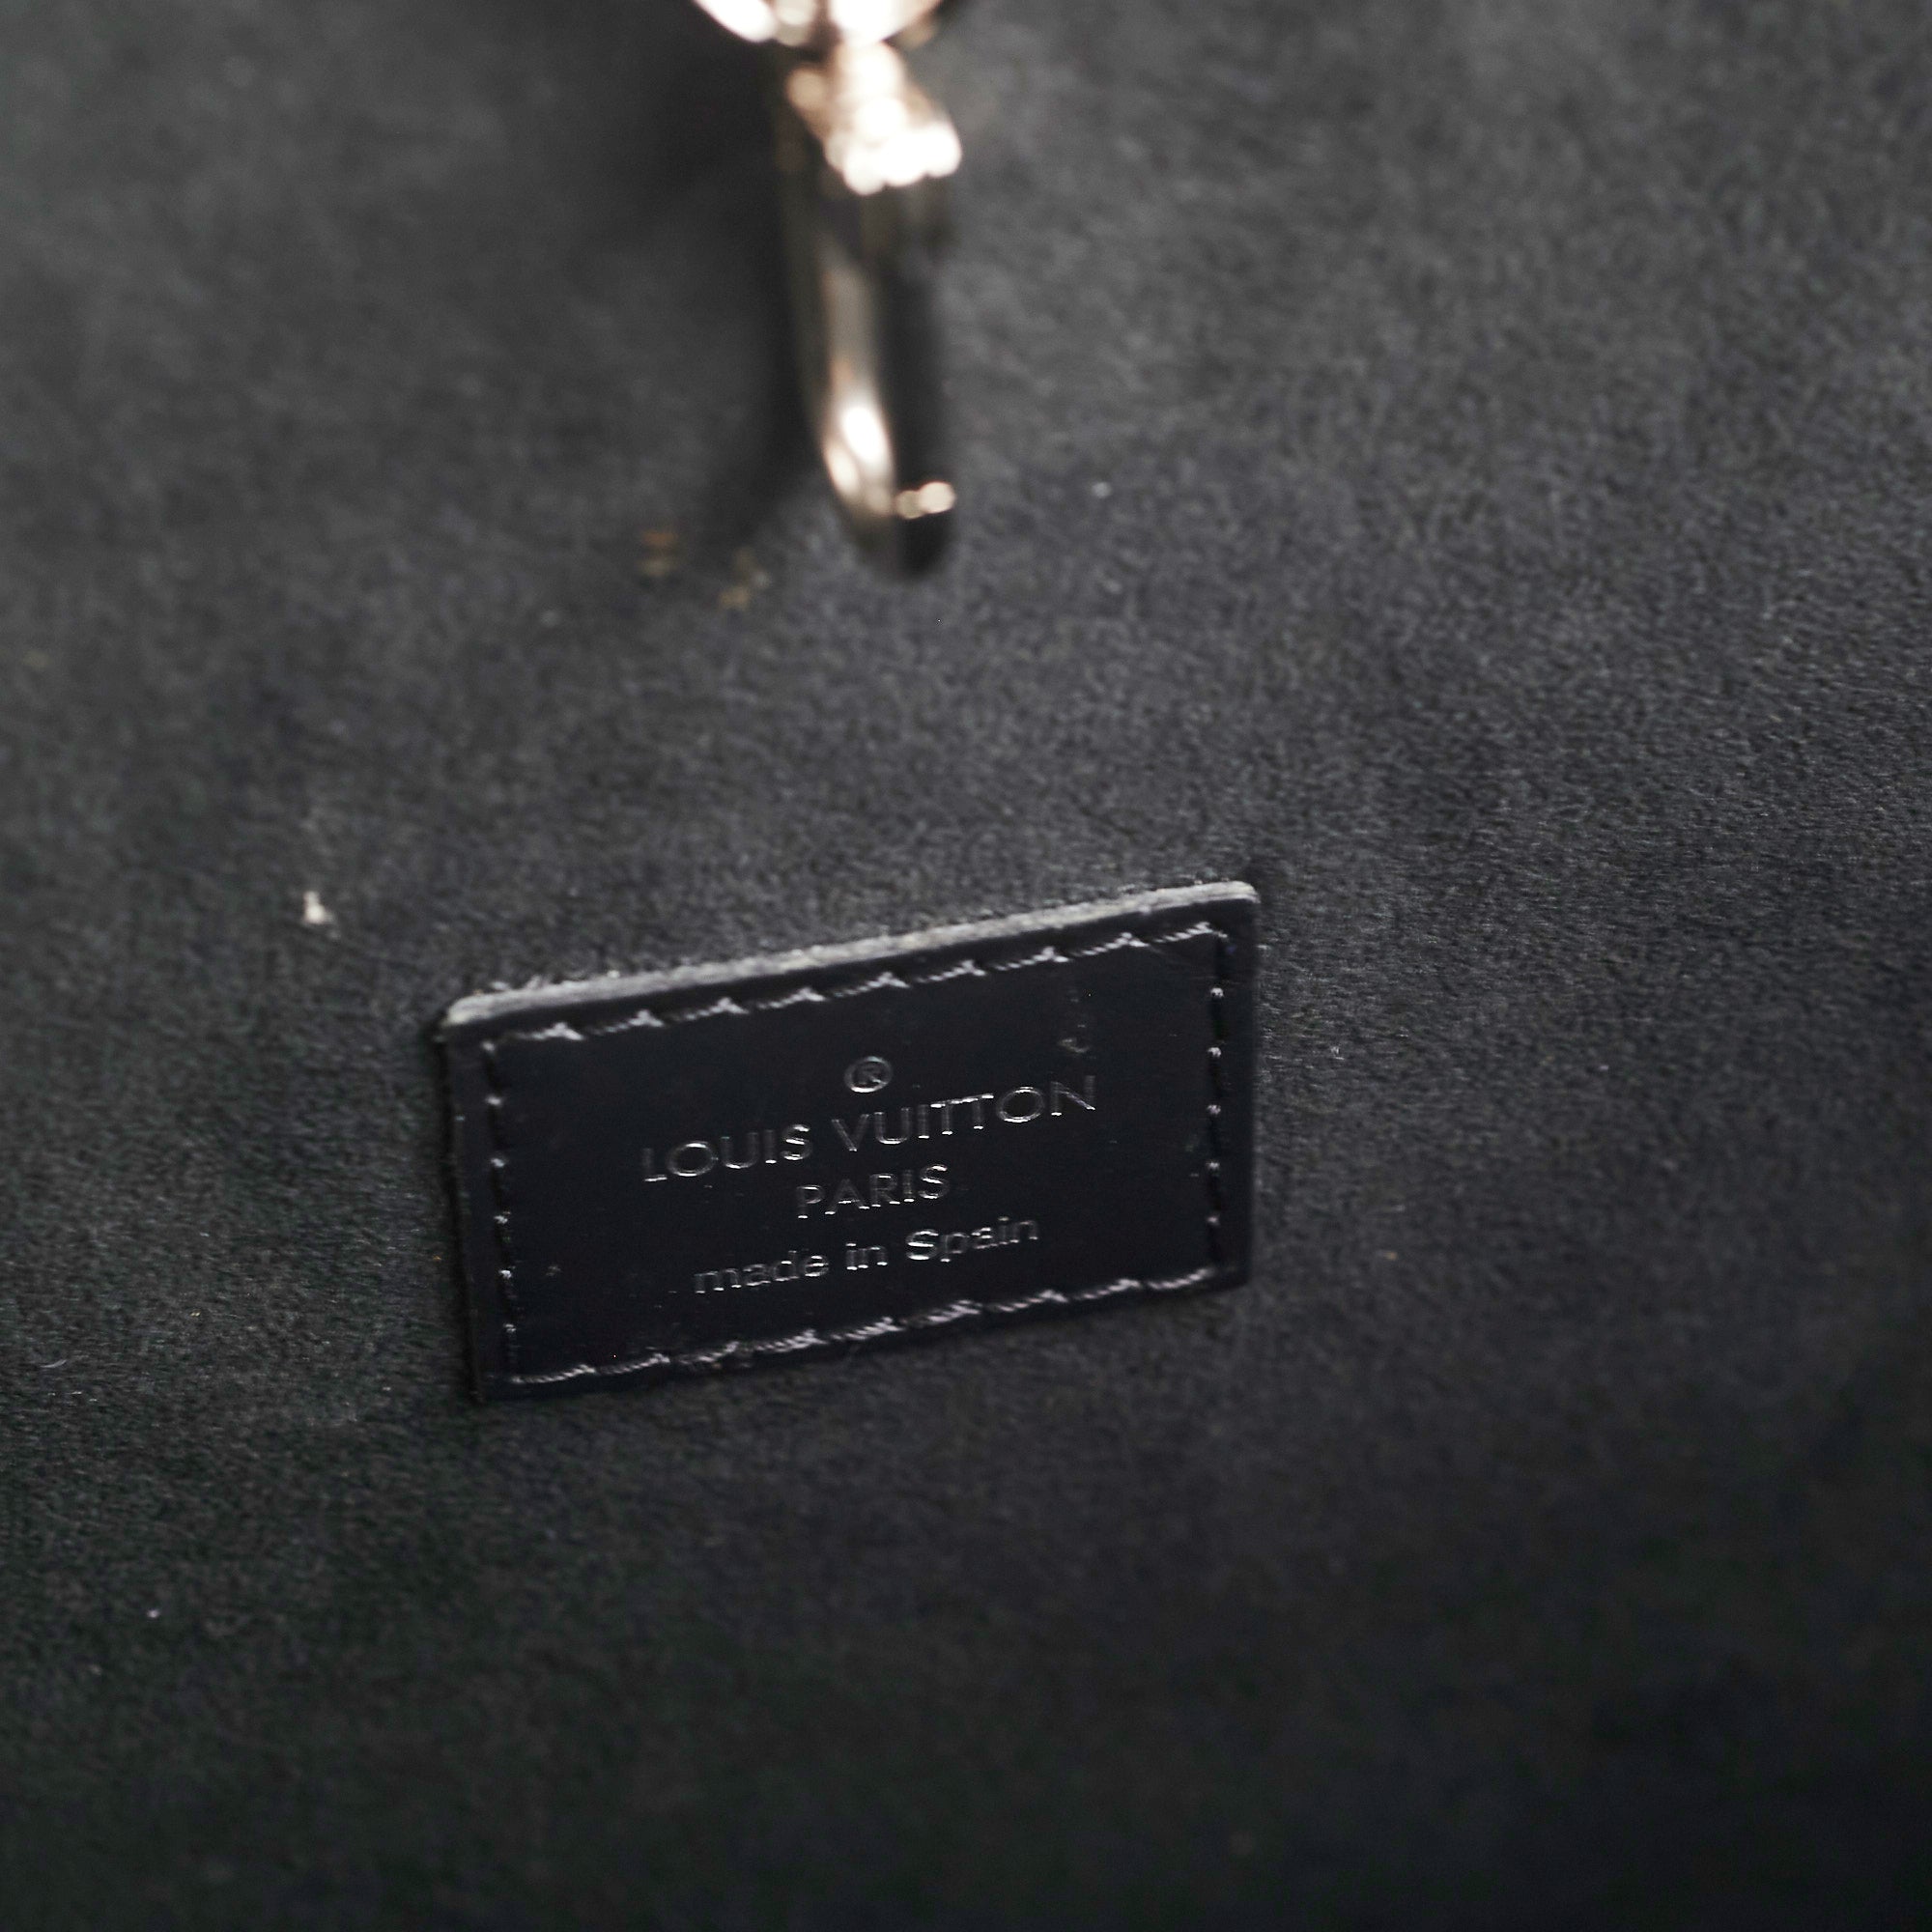 Louis Vuitton Since 1854 Neverfull MM Shoulder Bag - THE PURSE AFFAIR